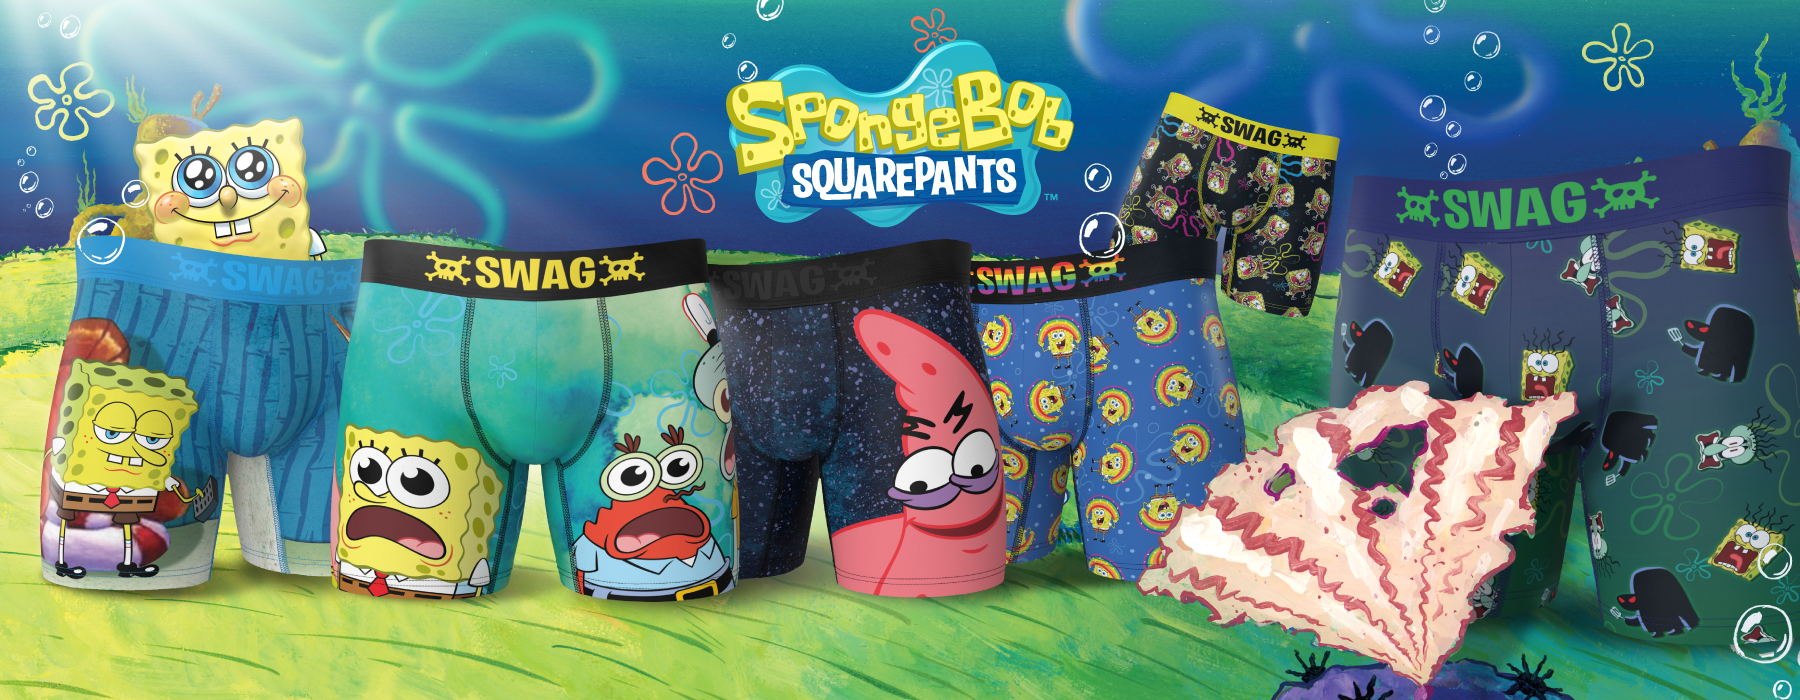 SpongeBob SquarePants - Patrick All Over, Sports Bra